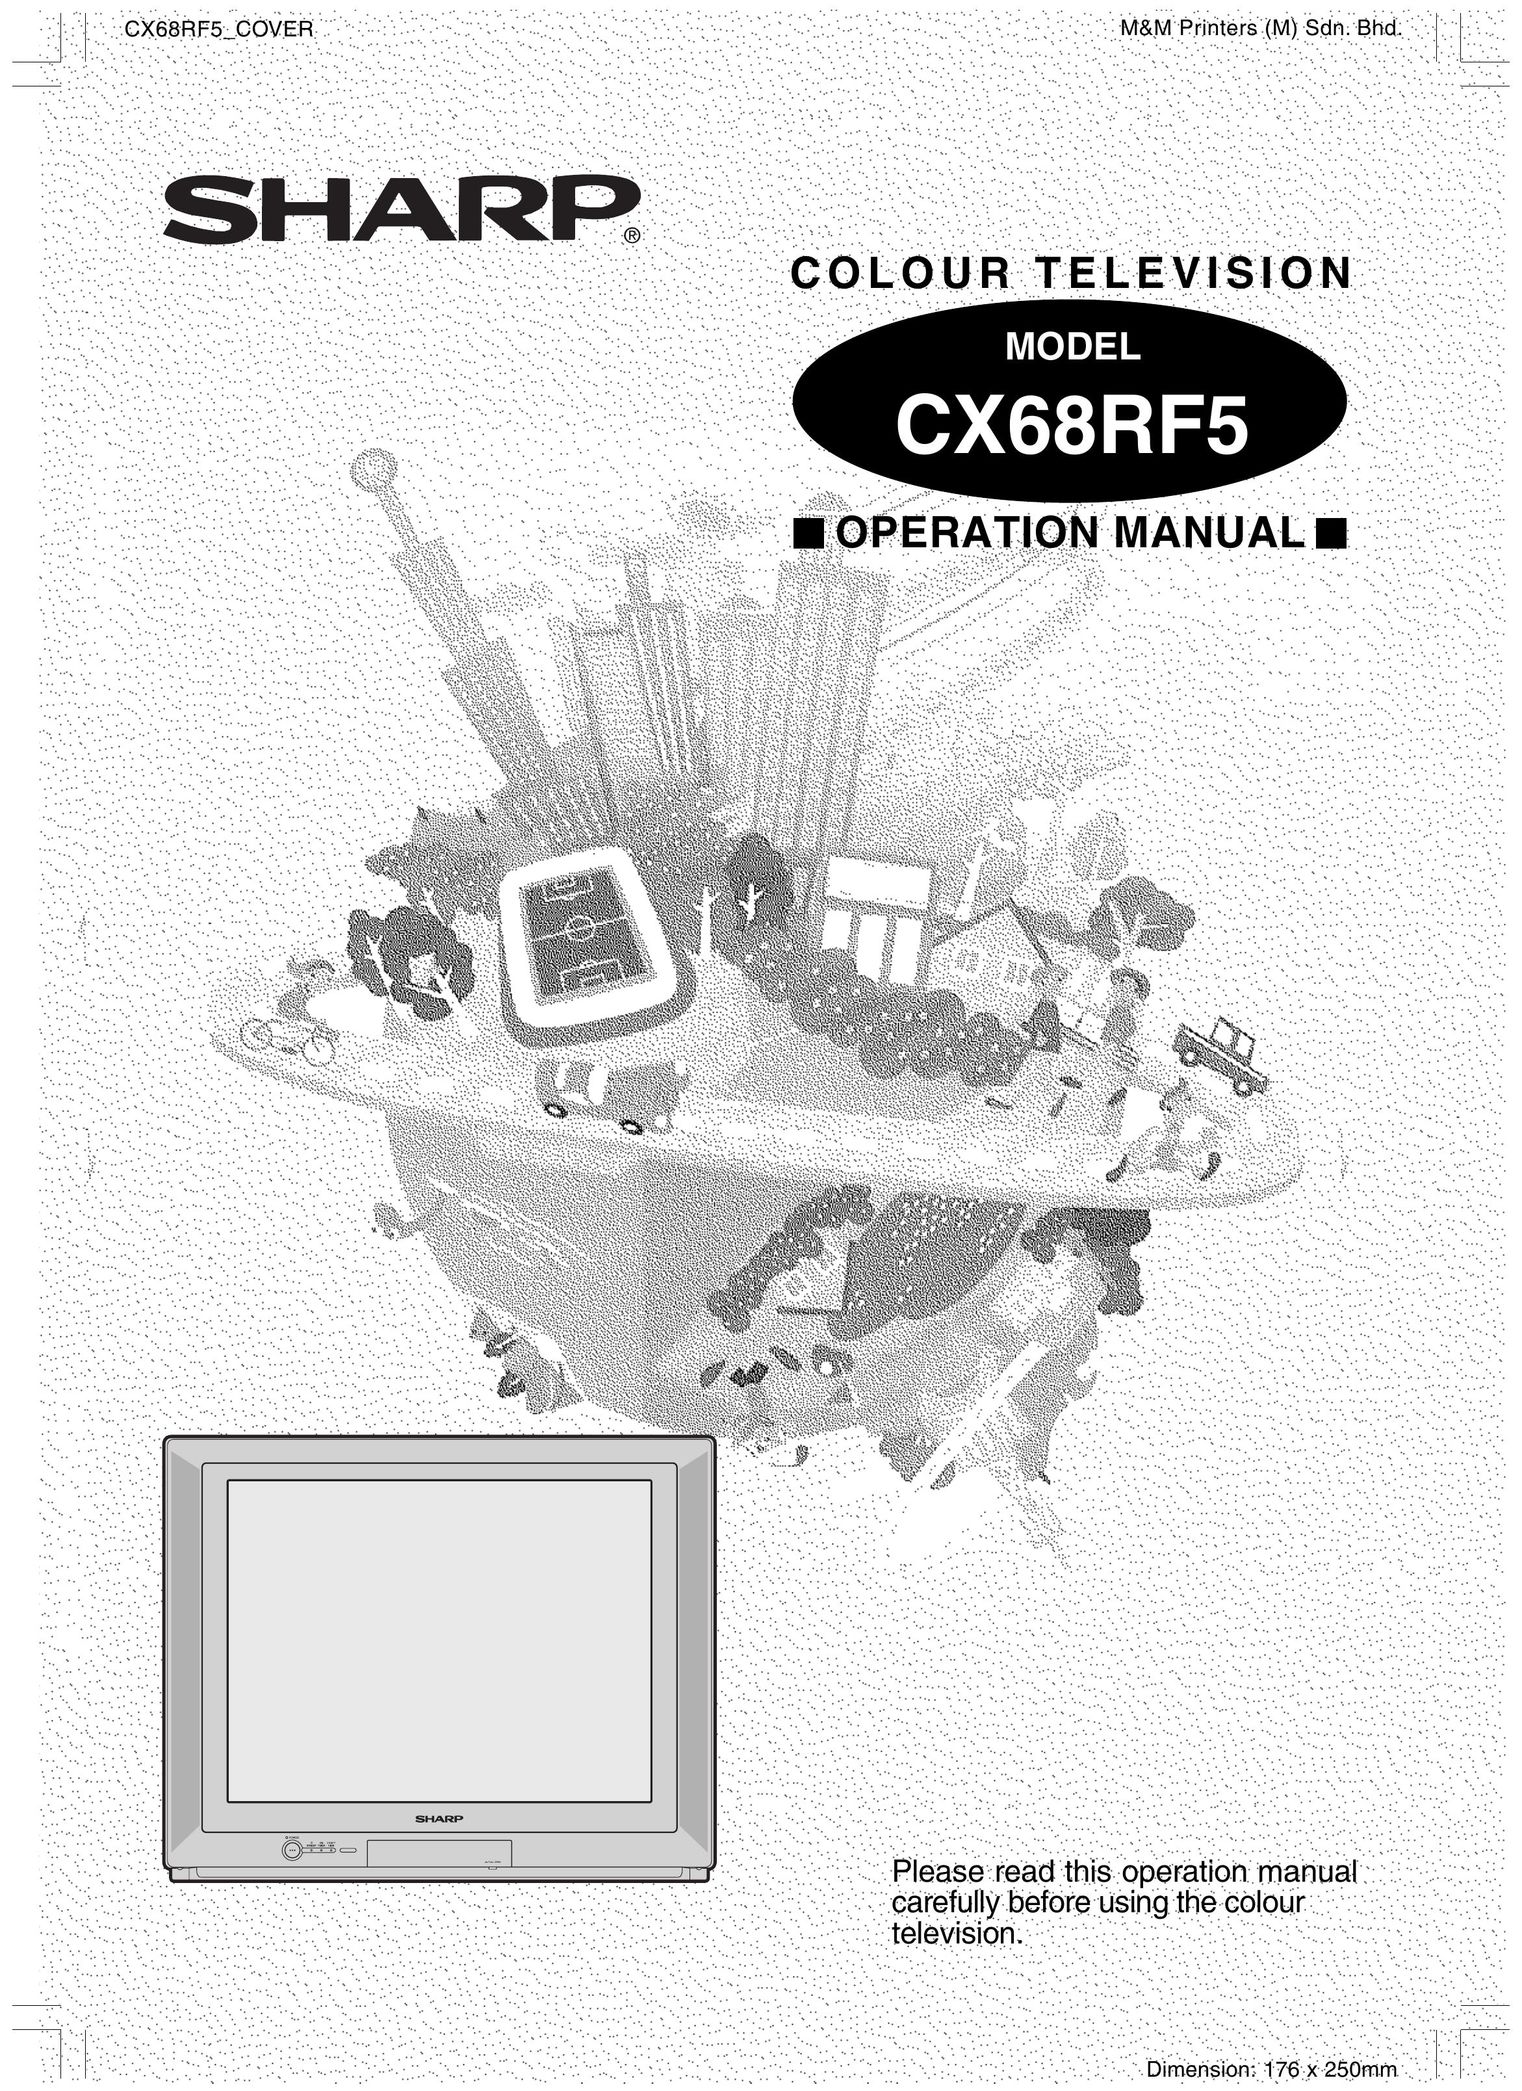 Sharp CX68RF5 Car Satellite TV System User Manual